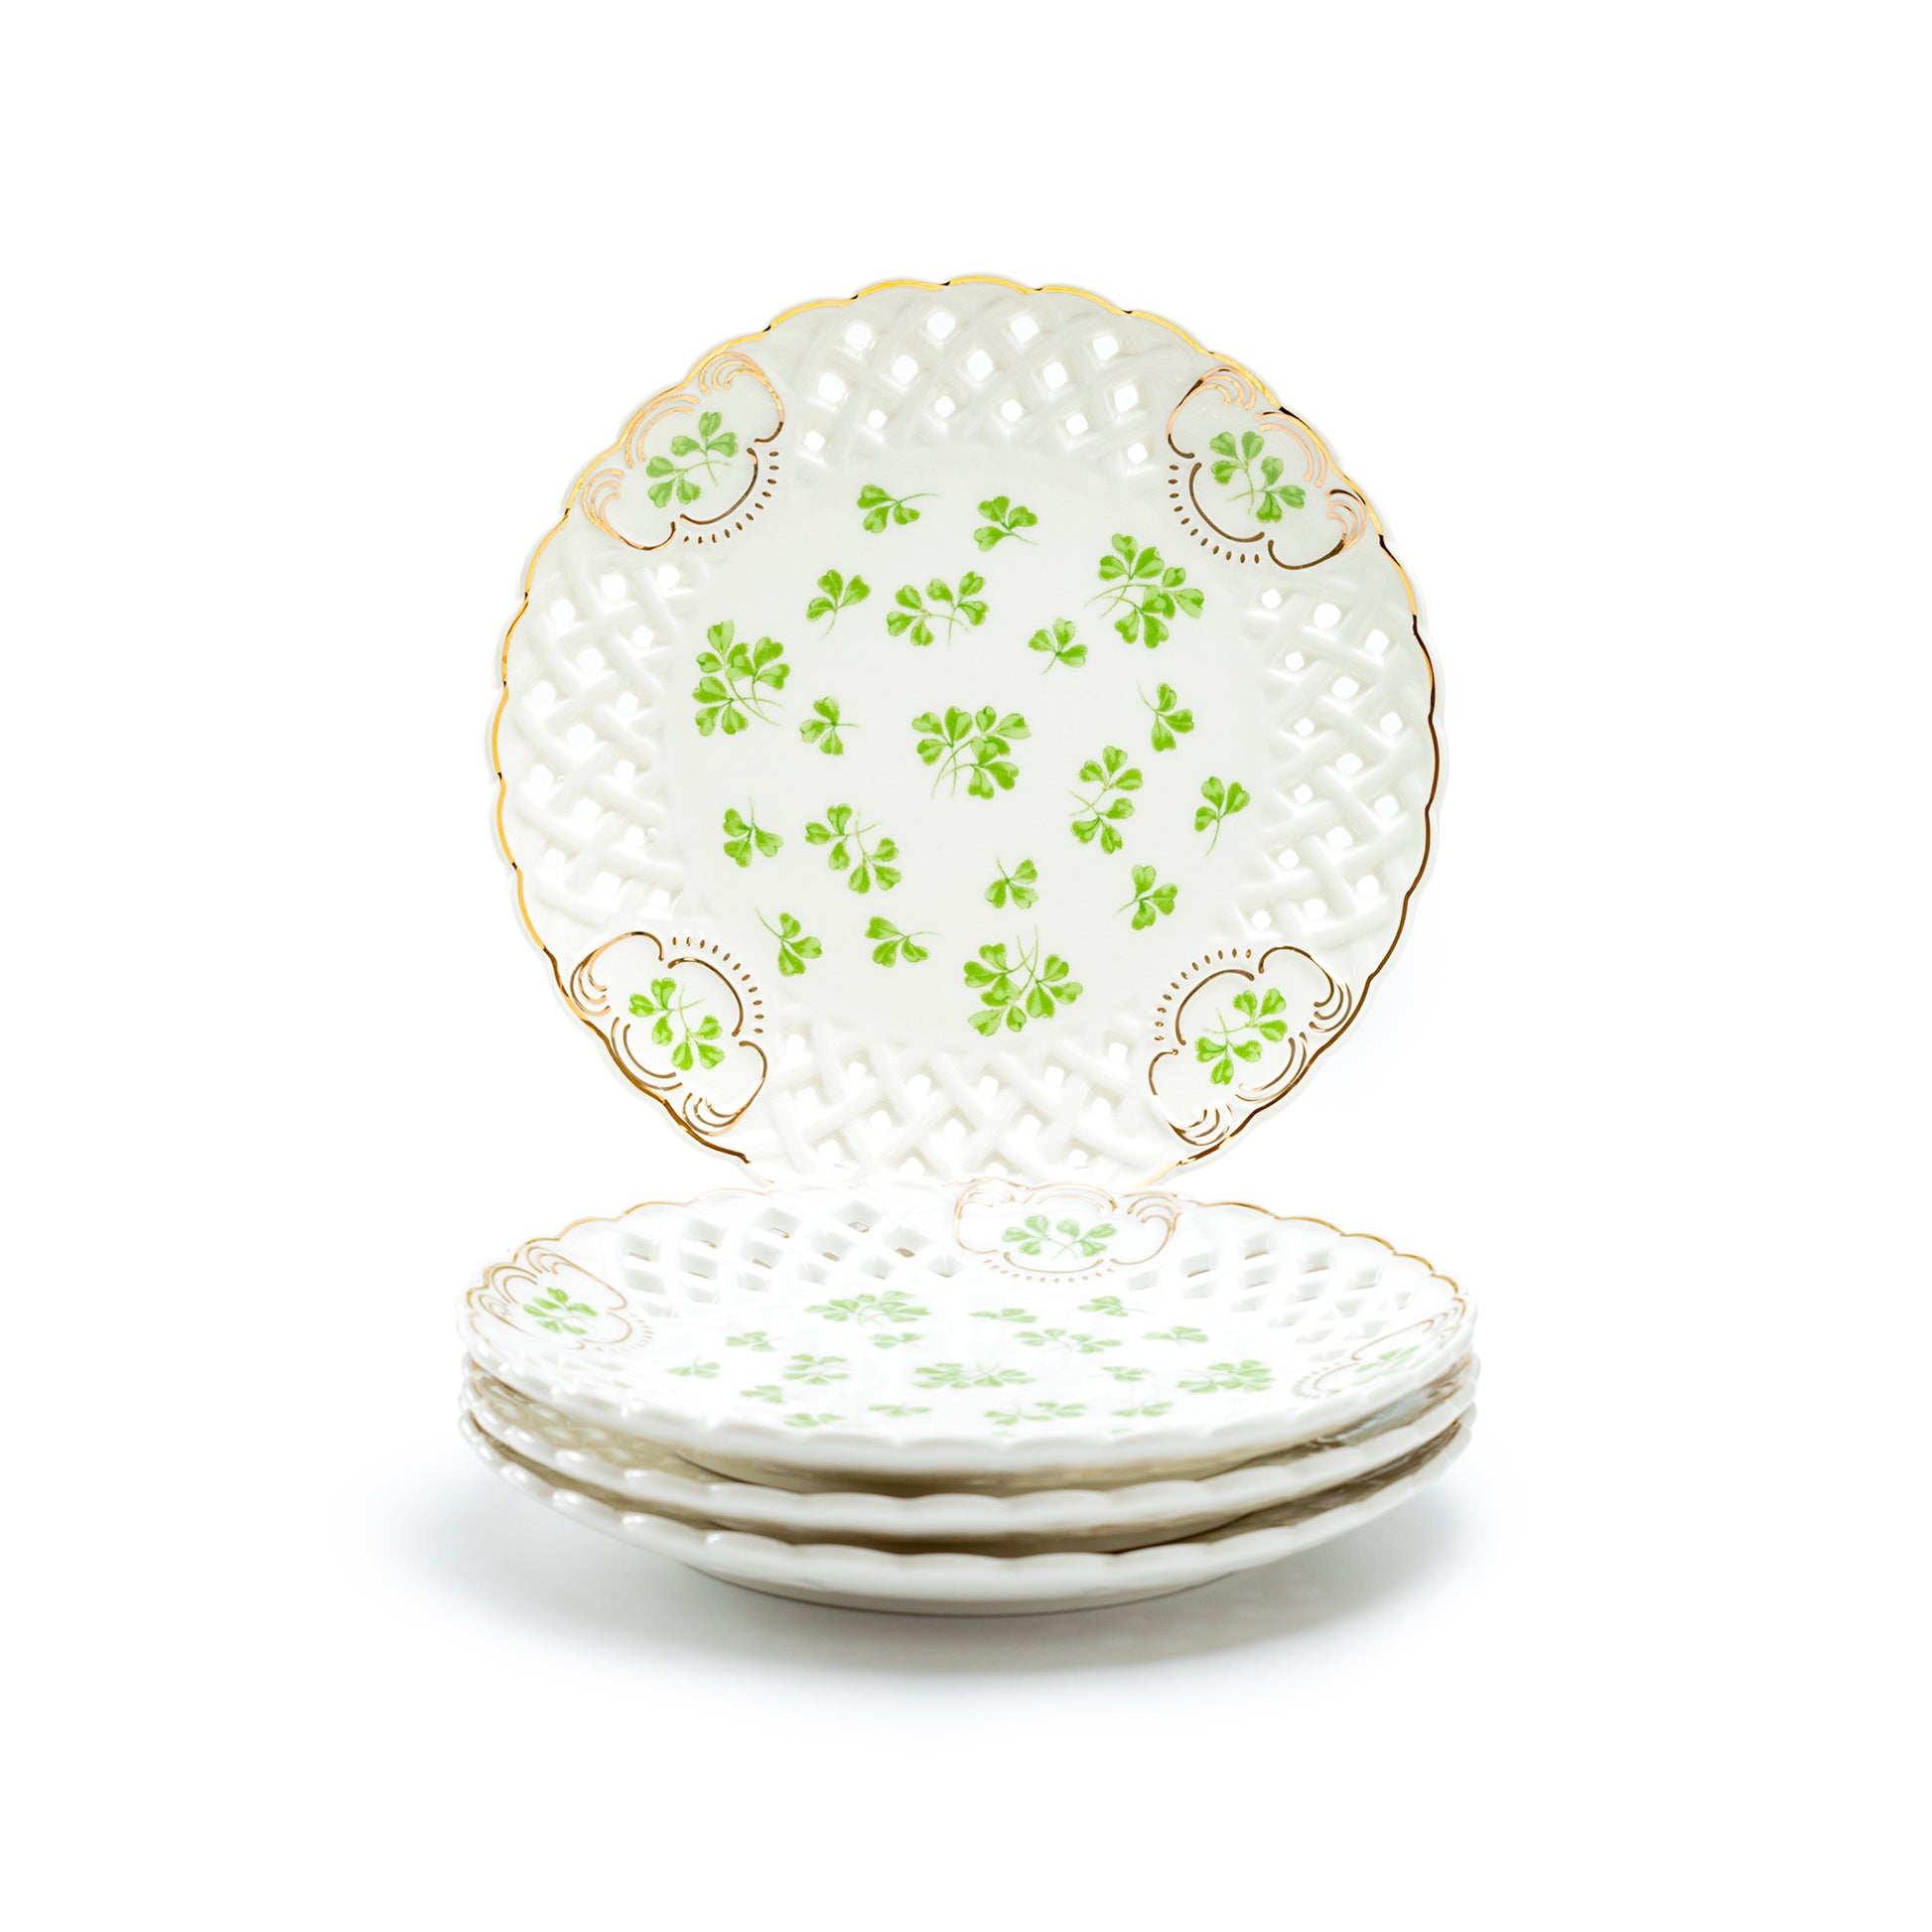 New Arrival St. Patrick's Day Grace Teaware 7.5" Shamrock Fine Porcelain Dessert Plate featuring an intricate pierced design